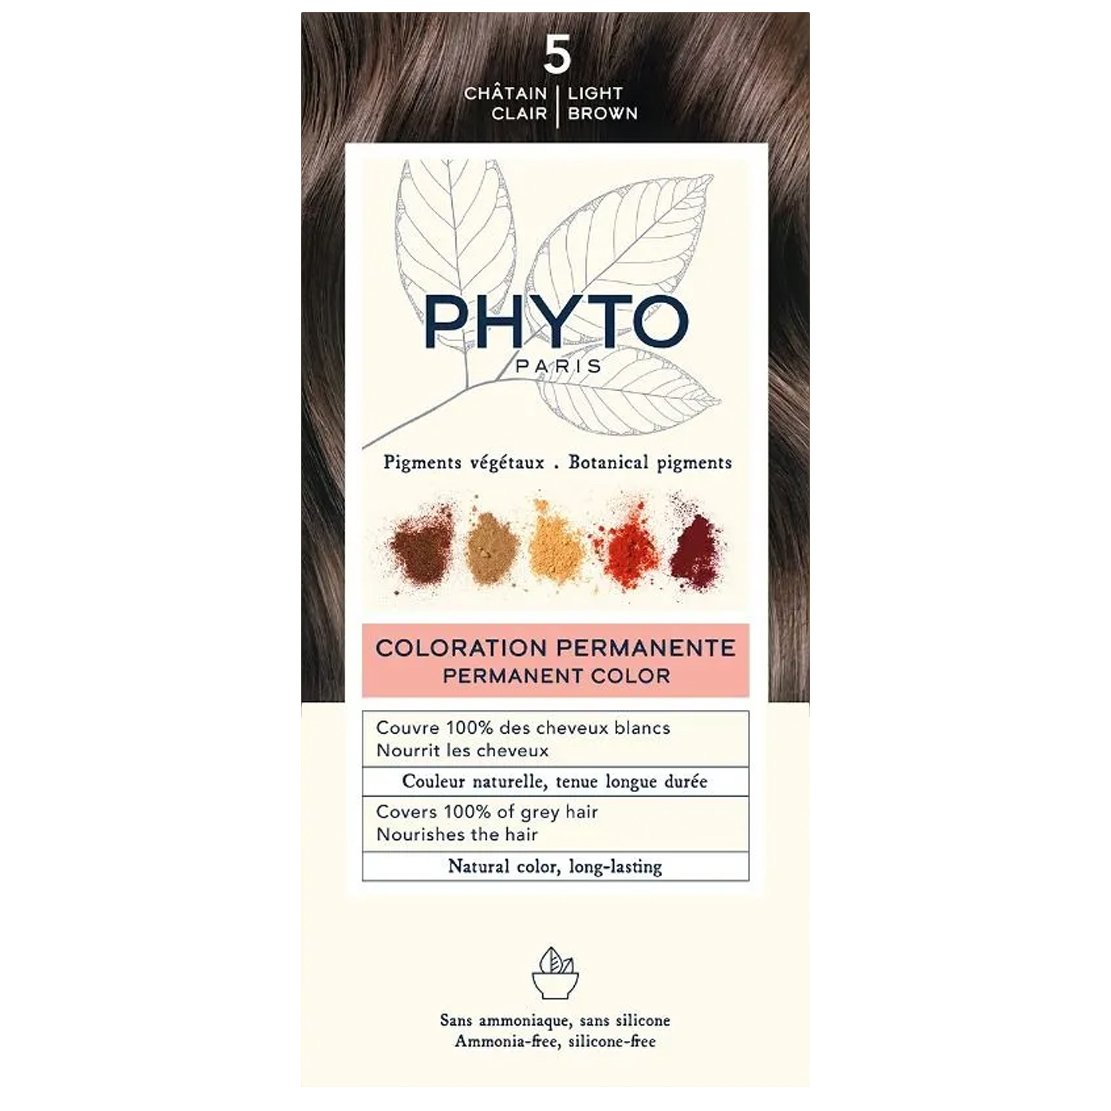 Phyto Permanent Hair Color Kit Μόνιμη Βαφή Μαλλιών με Φυτικές Χρωστικές, Χωρίς Αμμωνία 1 Τεμάχιο – 5 Καστανό Ανοιχτό